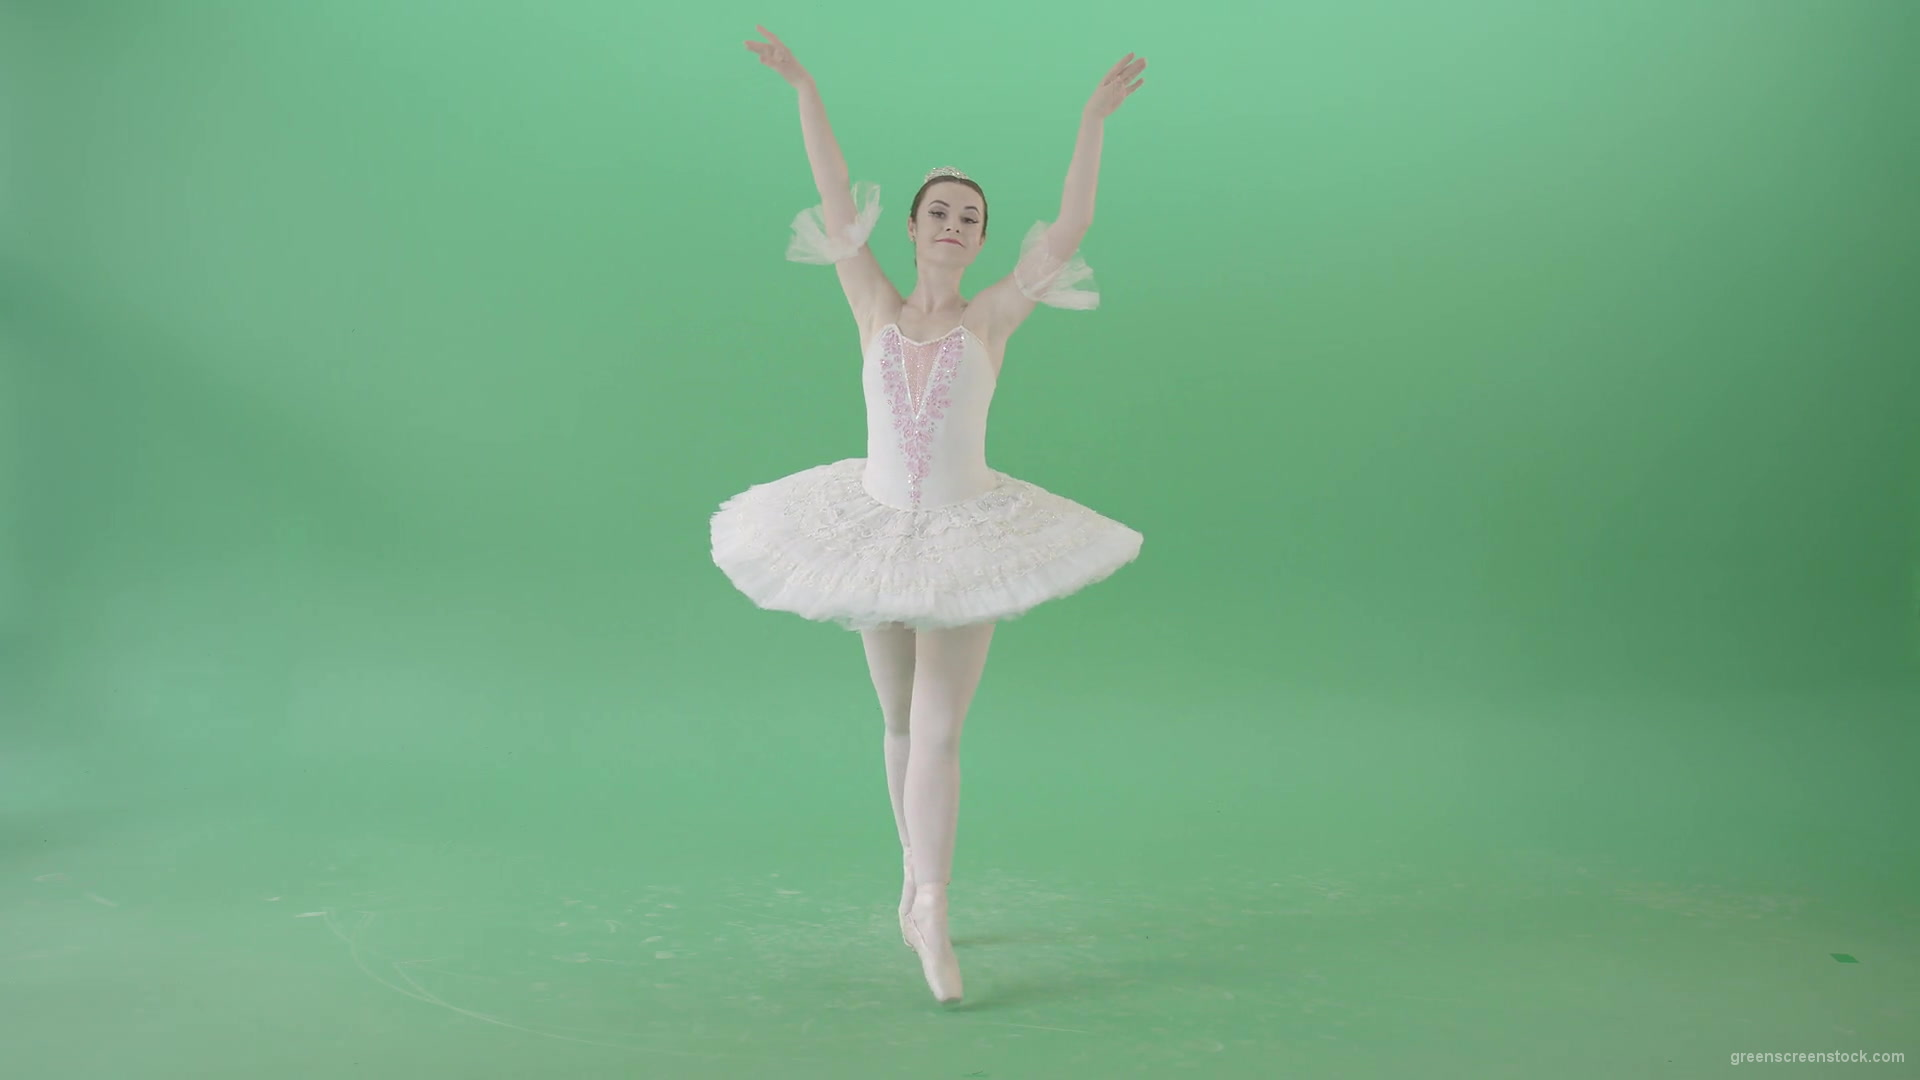 Girl-in-ballet-white-dress-performs-in-green-screen-studio-spinning-elegant-4K-Video-Footage-1920_009 Green Screen Stock